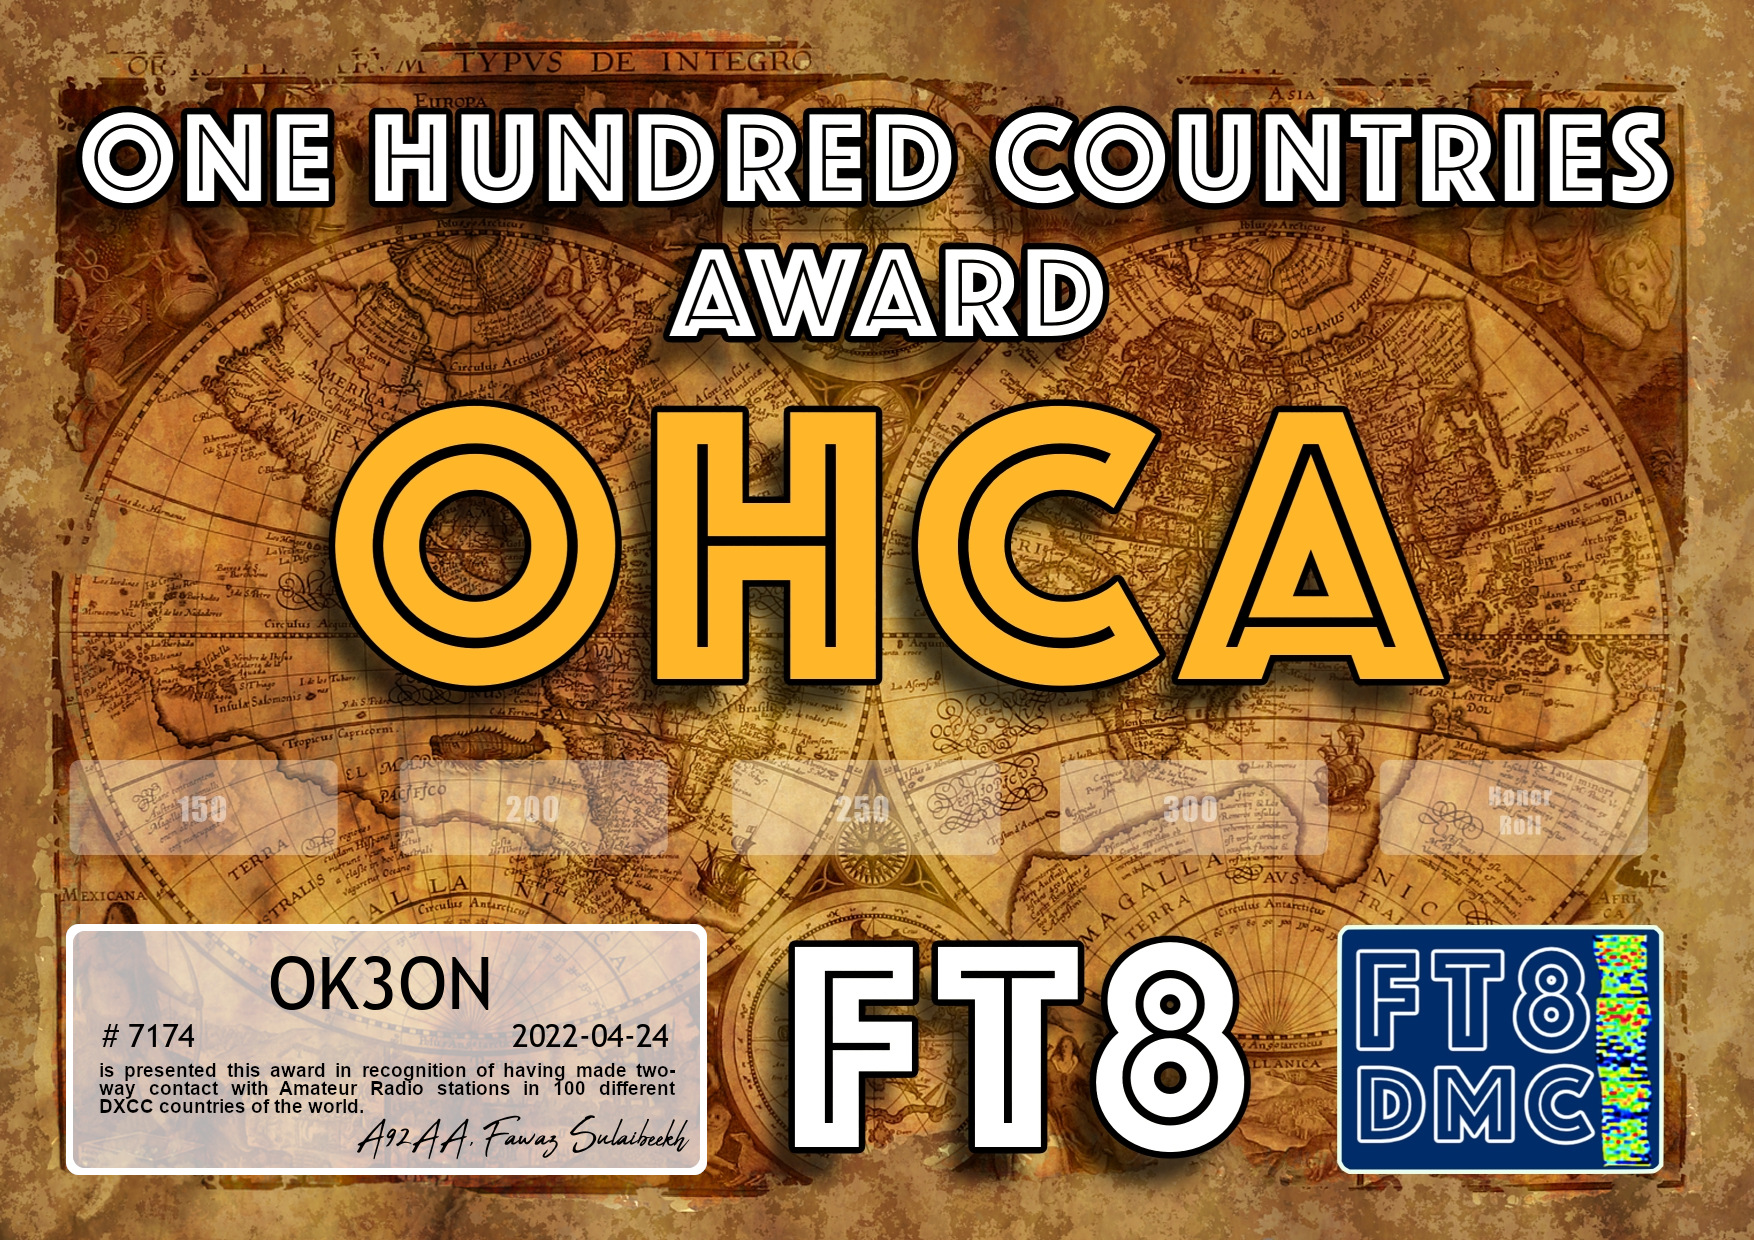 awards/OK3ON-OHCA-100_FT8DMC.jpg